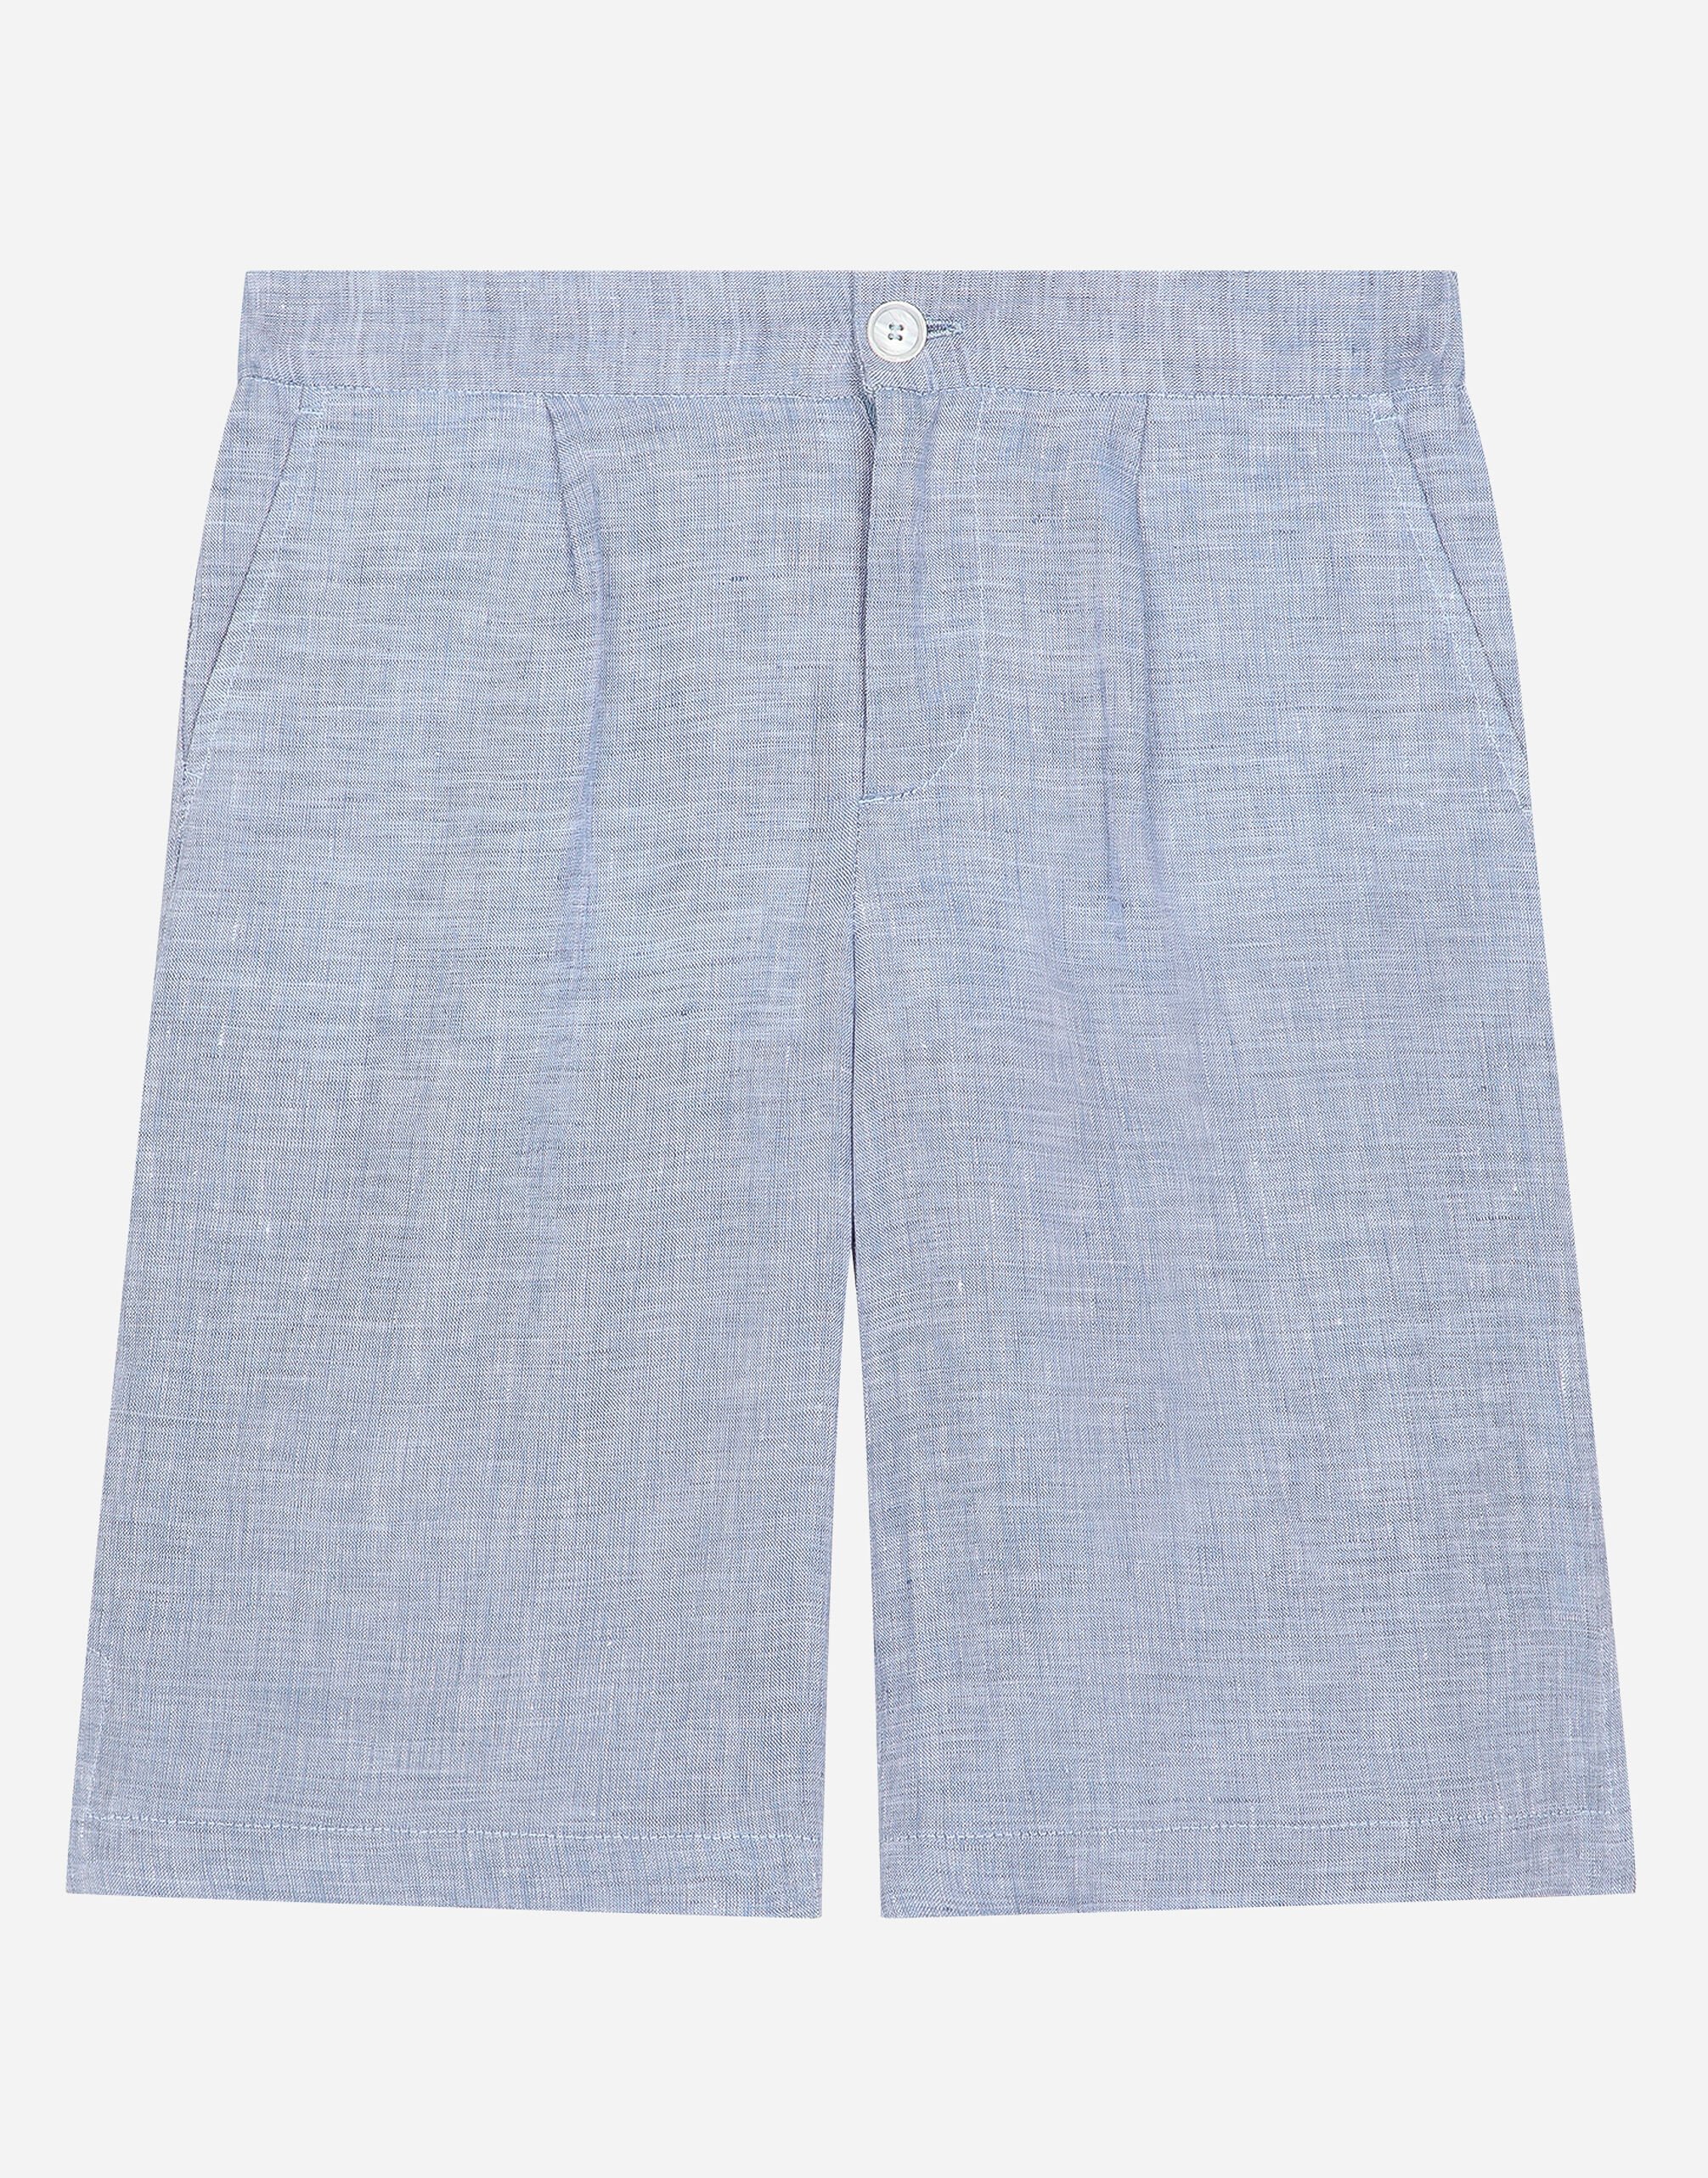 Dolce & Gabbana Non-stretch linen shorts Print G8PB8THI70H